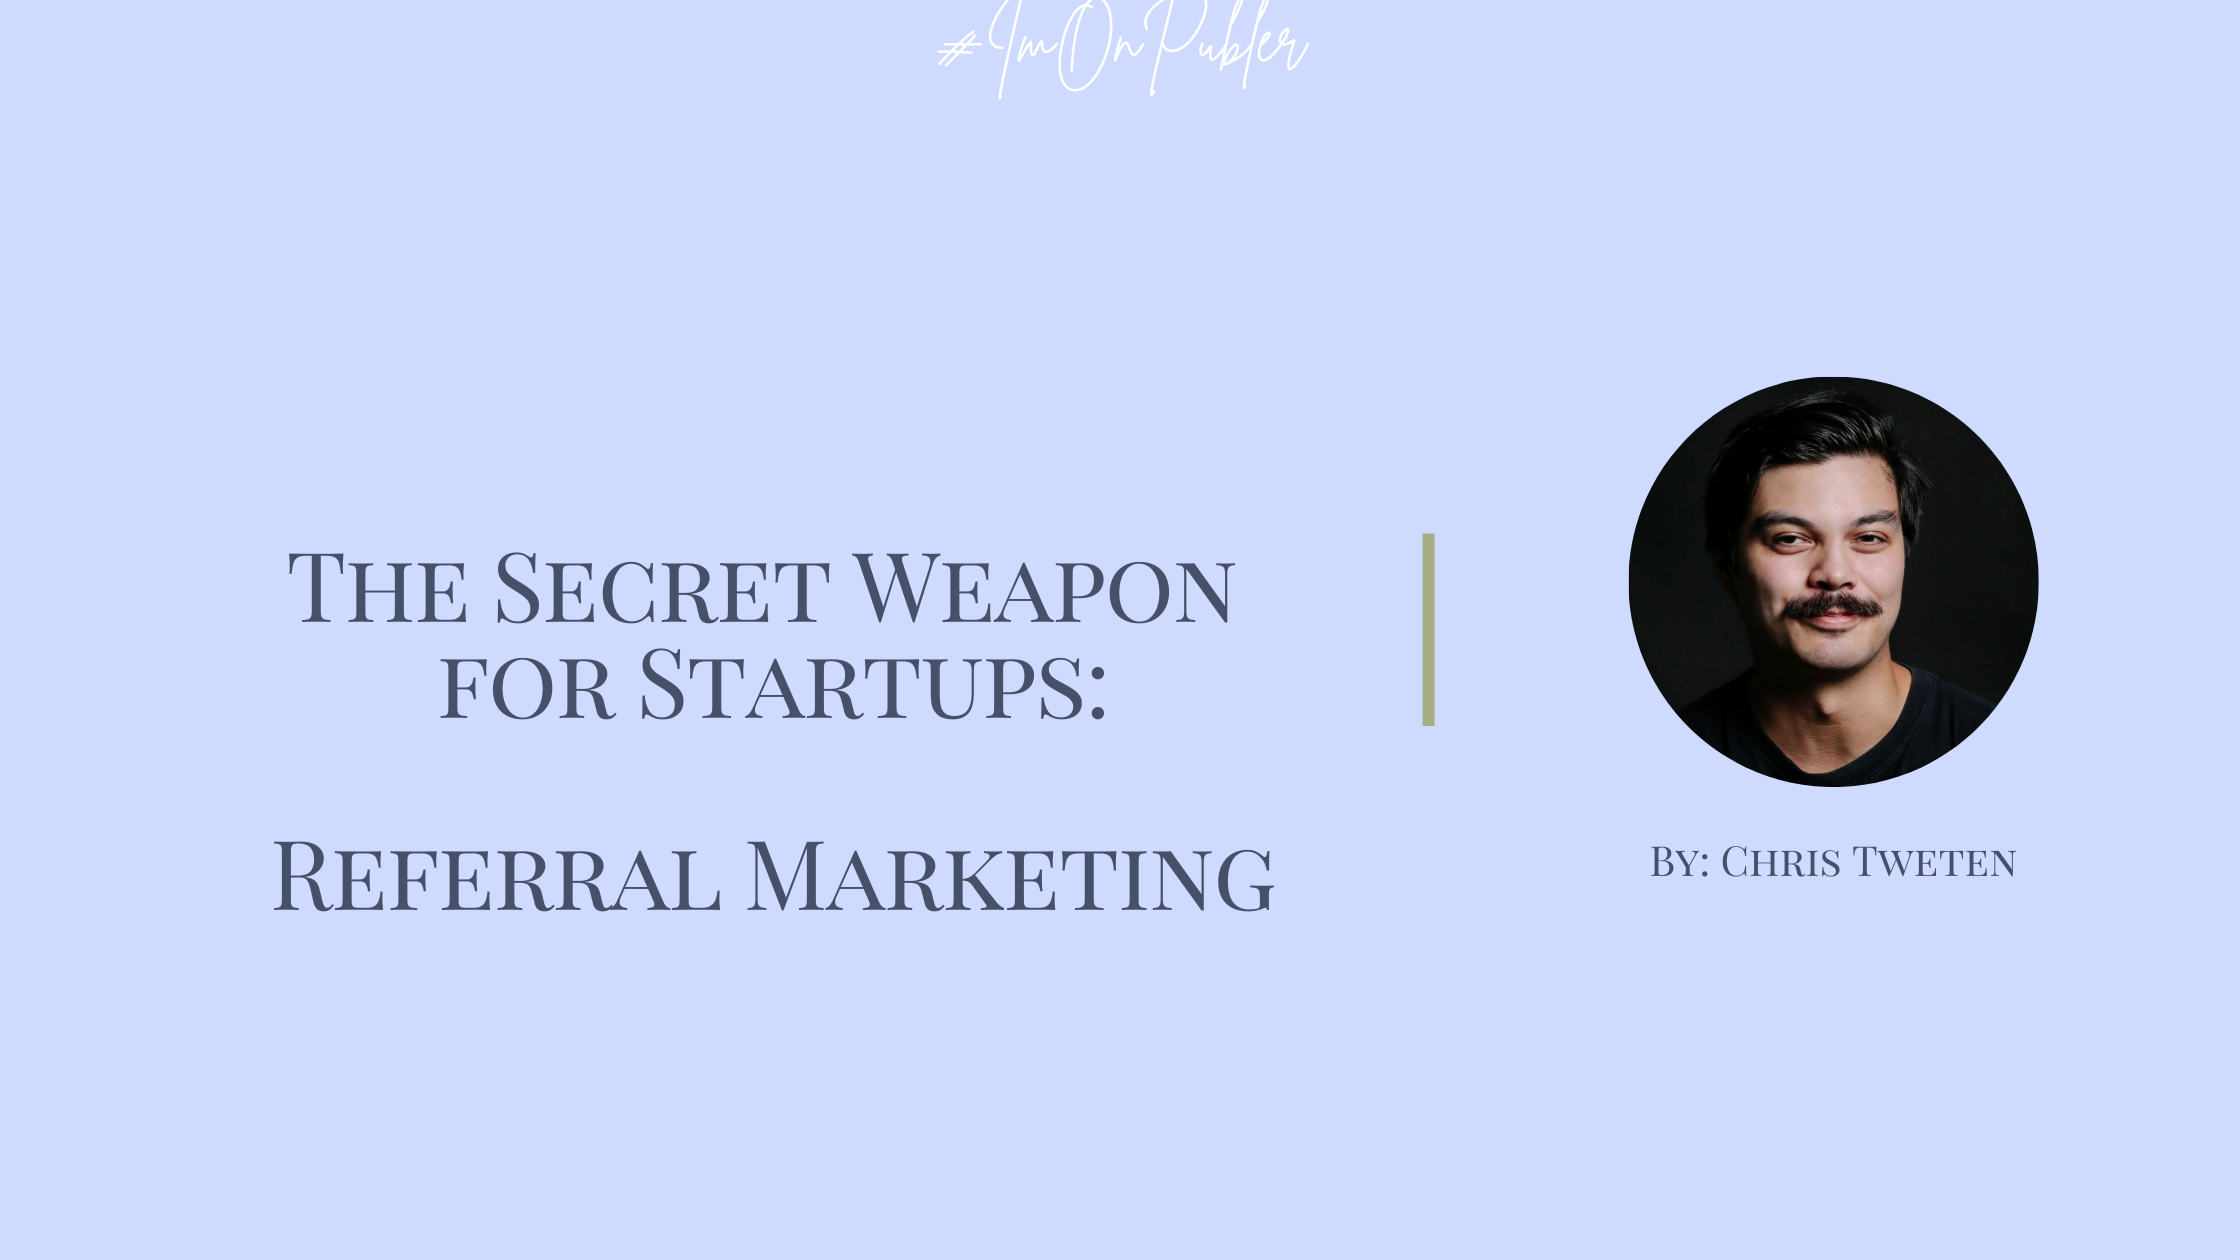 The Secret Weapon for Startups: Referral Marketing by Chris Tweten